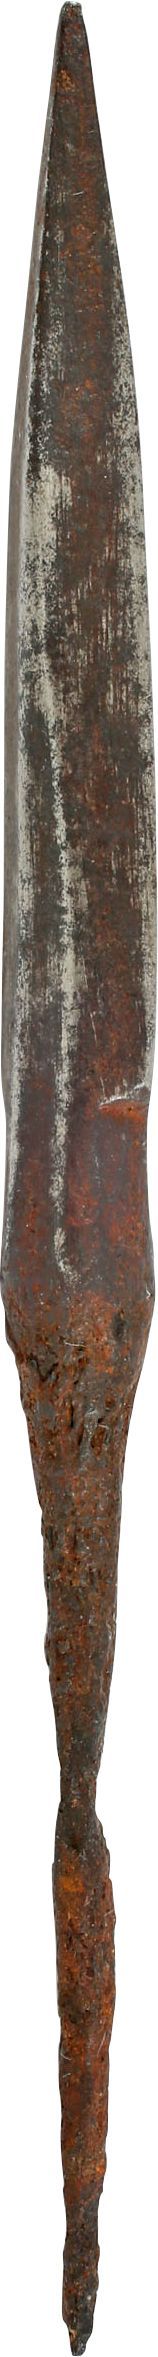 17th CENTURY OTTOMAN ARROWHEAD - Fagan Arms